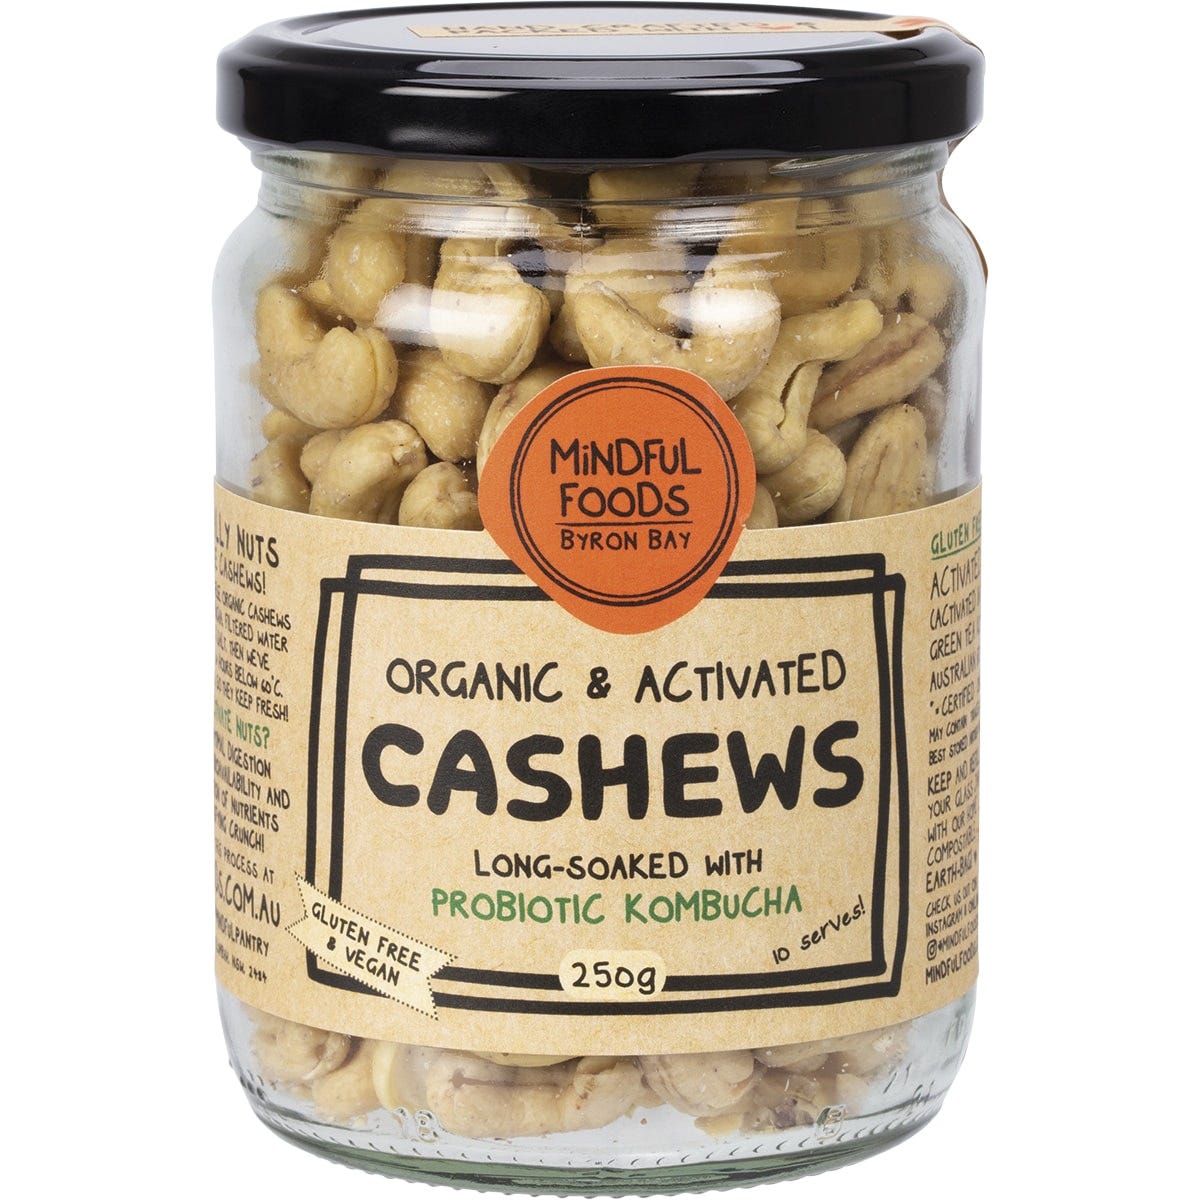 Cashews Organic & Activated